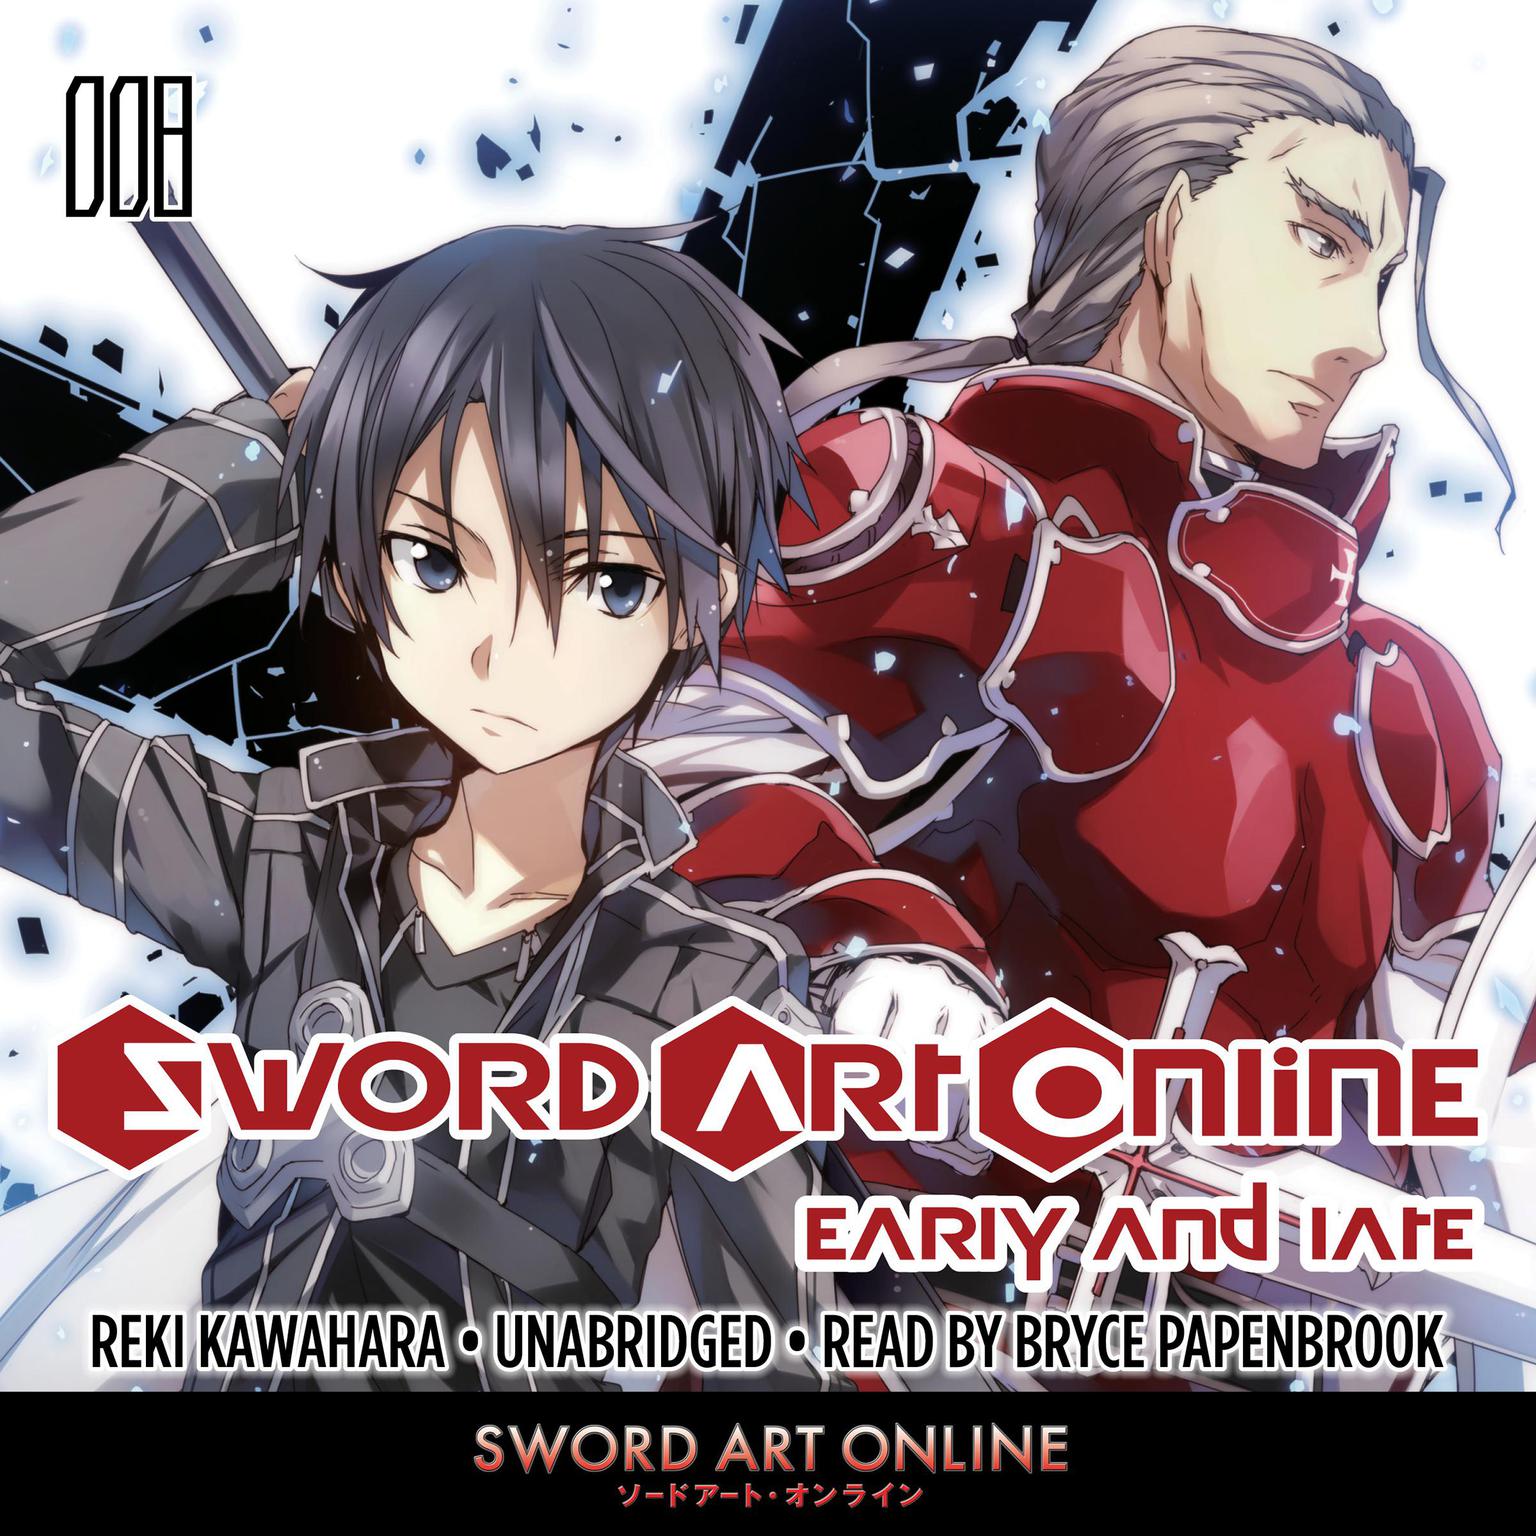 Sword Art Online 8: Early and Late Audiobook, by Reki Kawahara